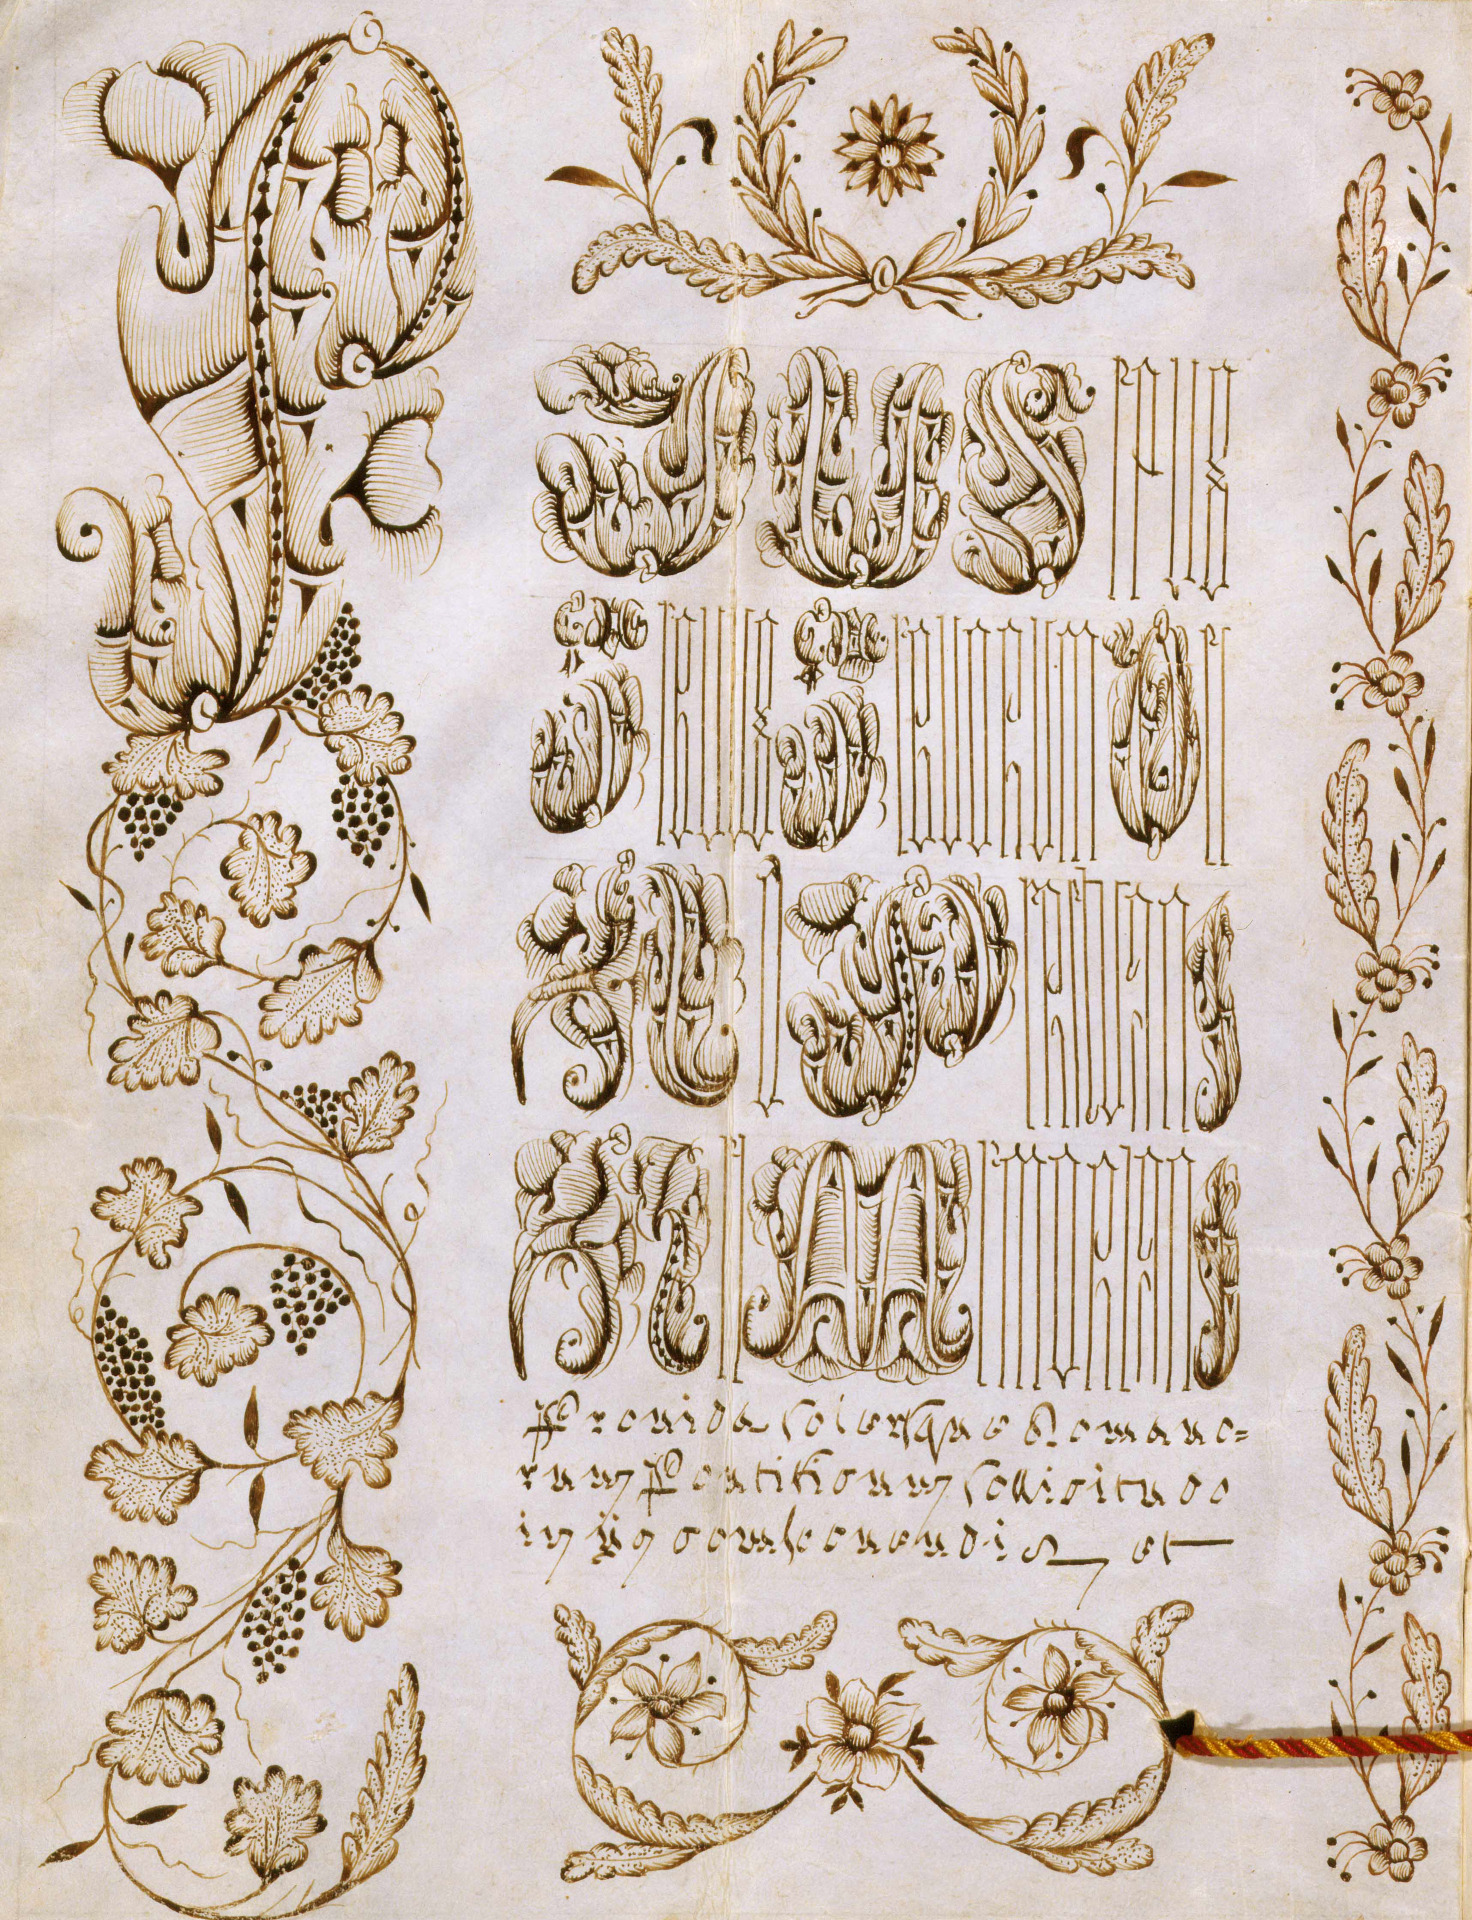 Zirkumskriptionsbulle Provida solersque 1821